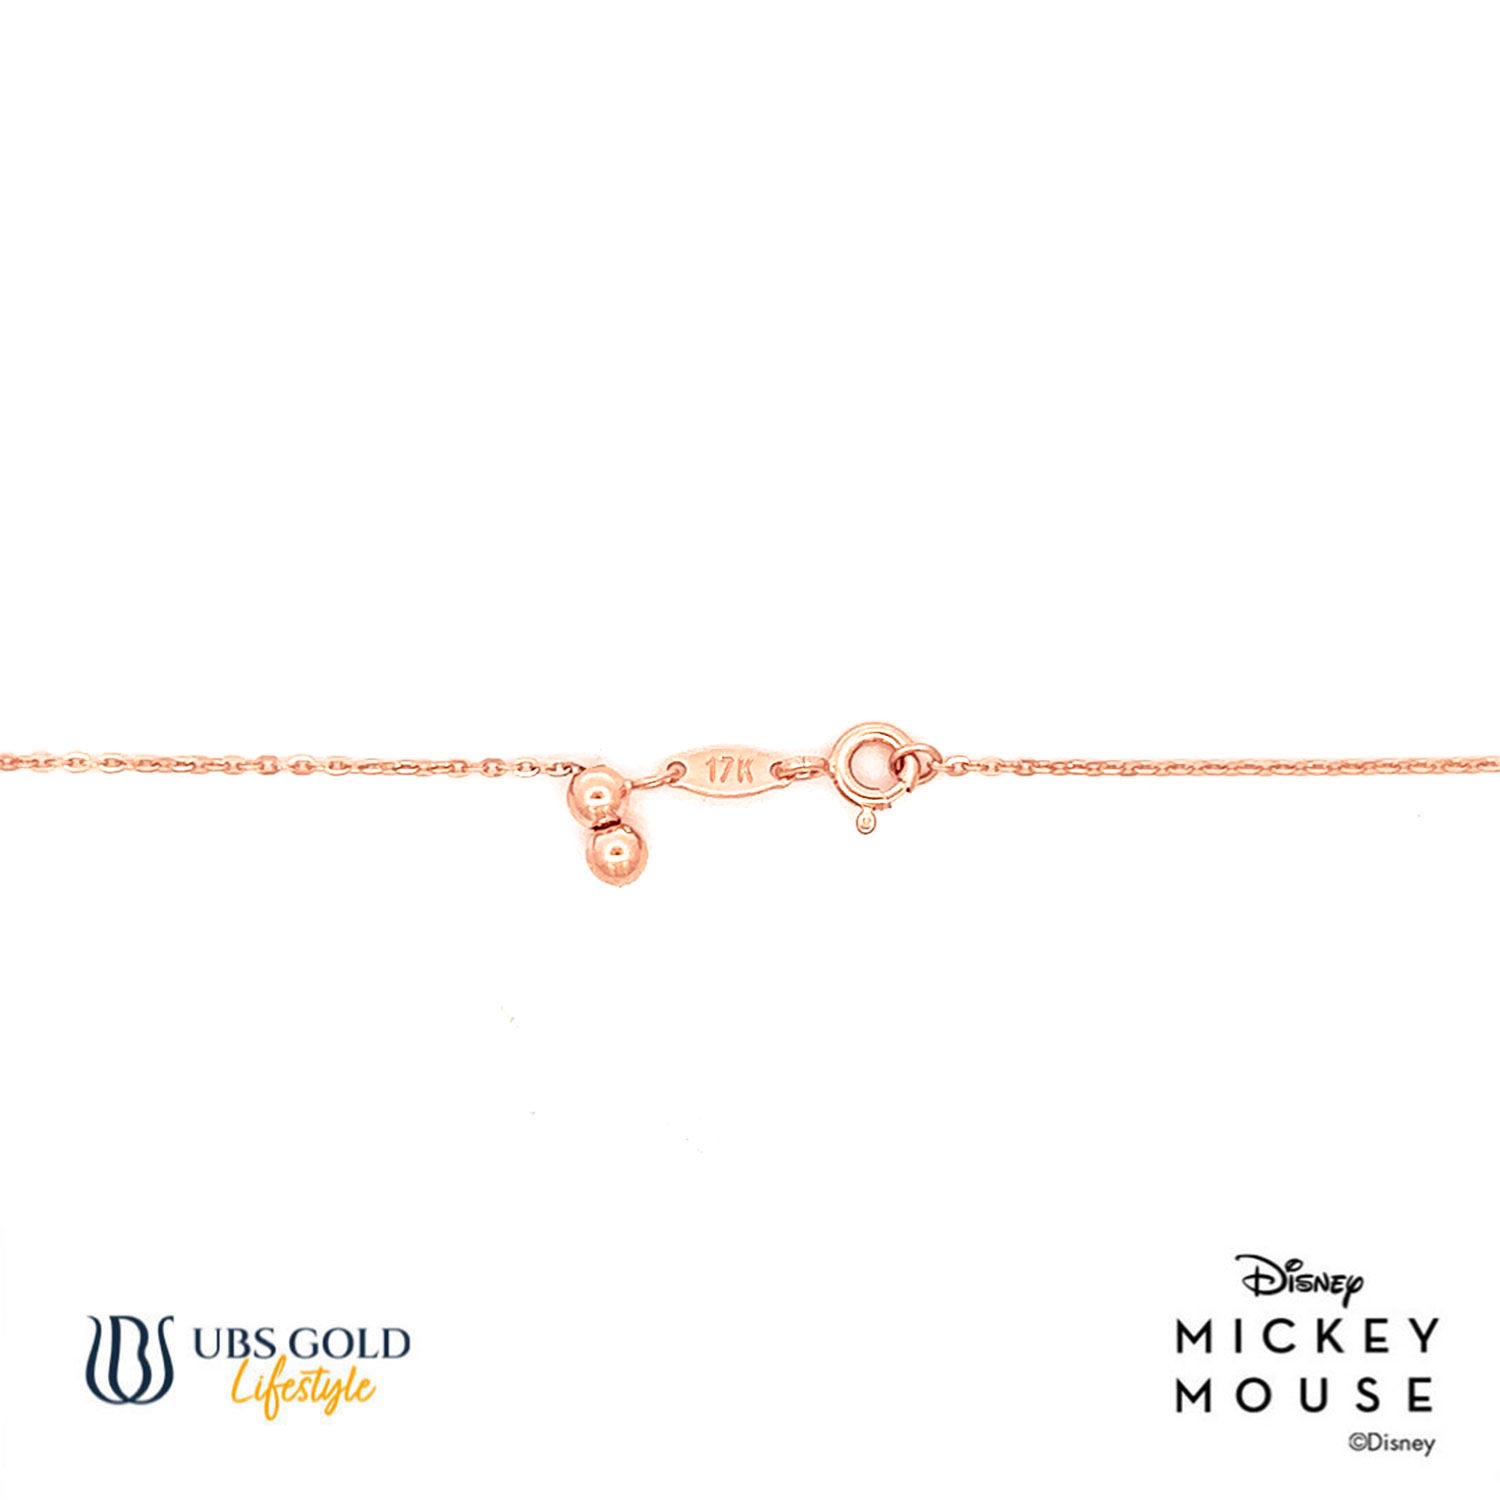 UBS Gold Kalung Emas Disney Mickey Mouse - Kky0460 - 17K